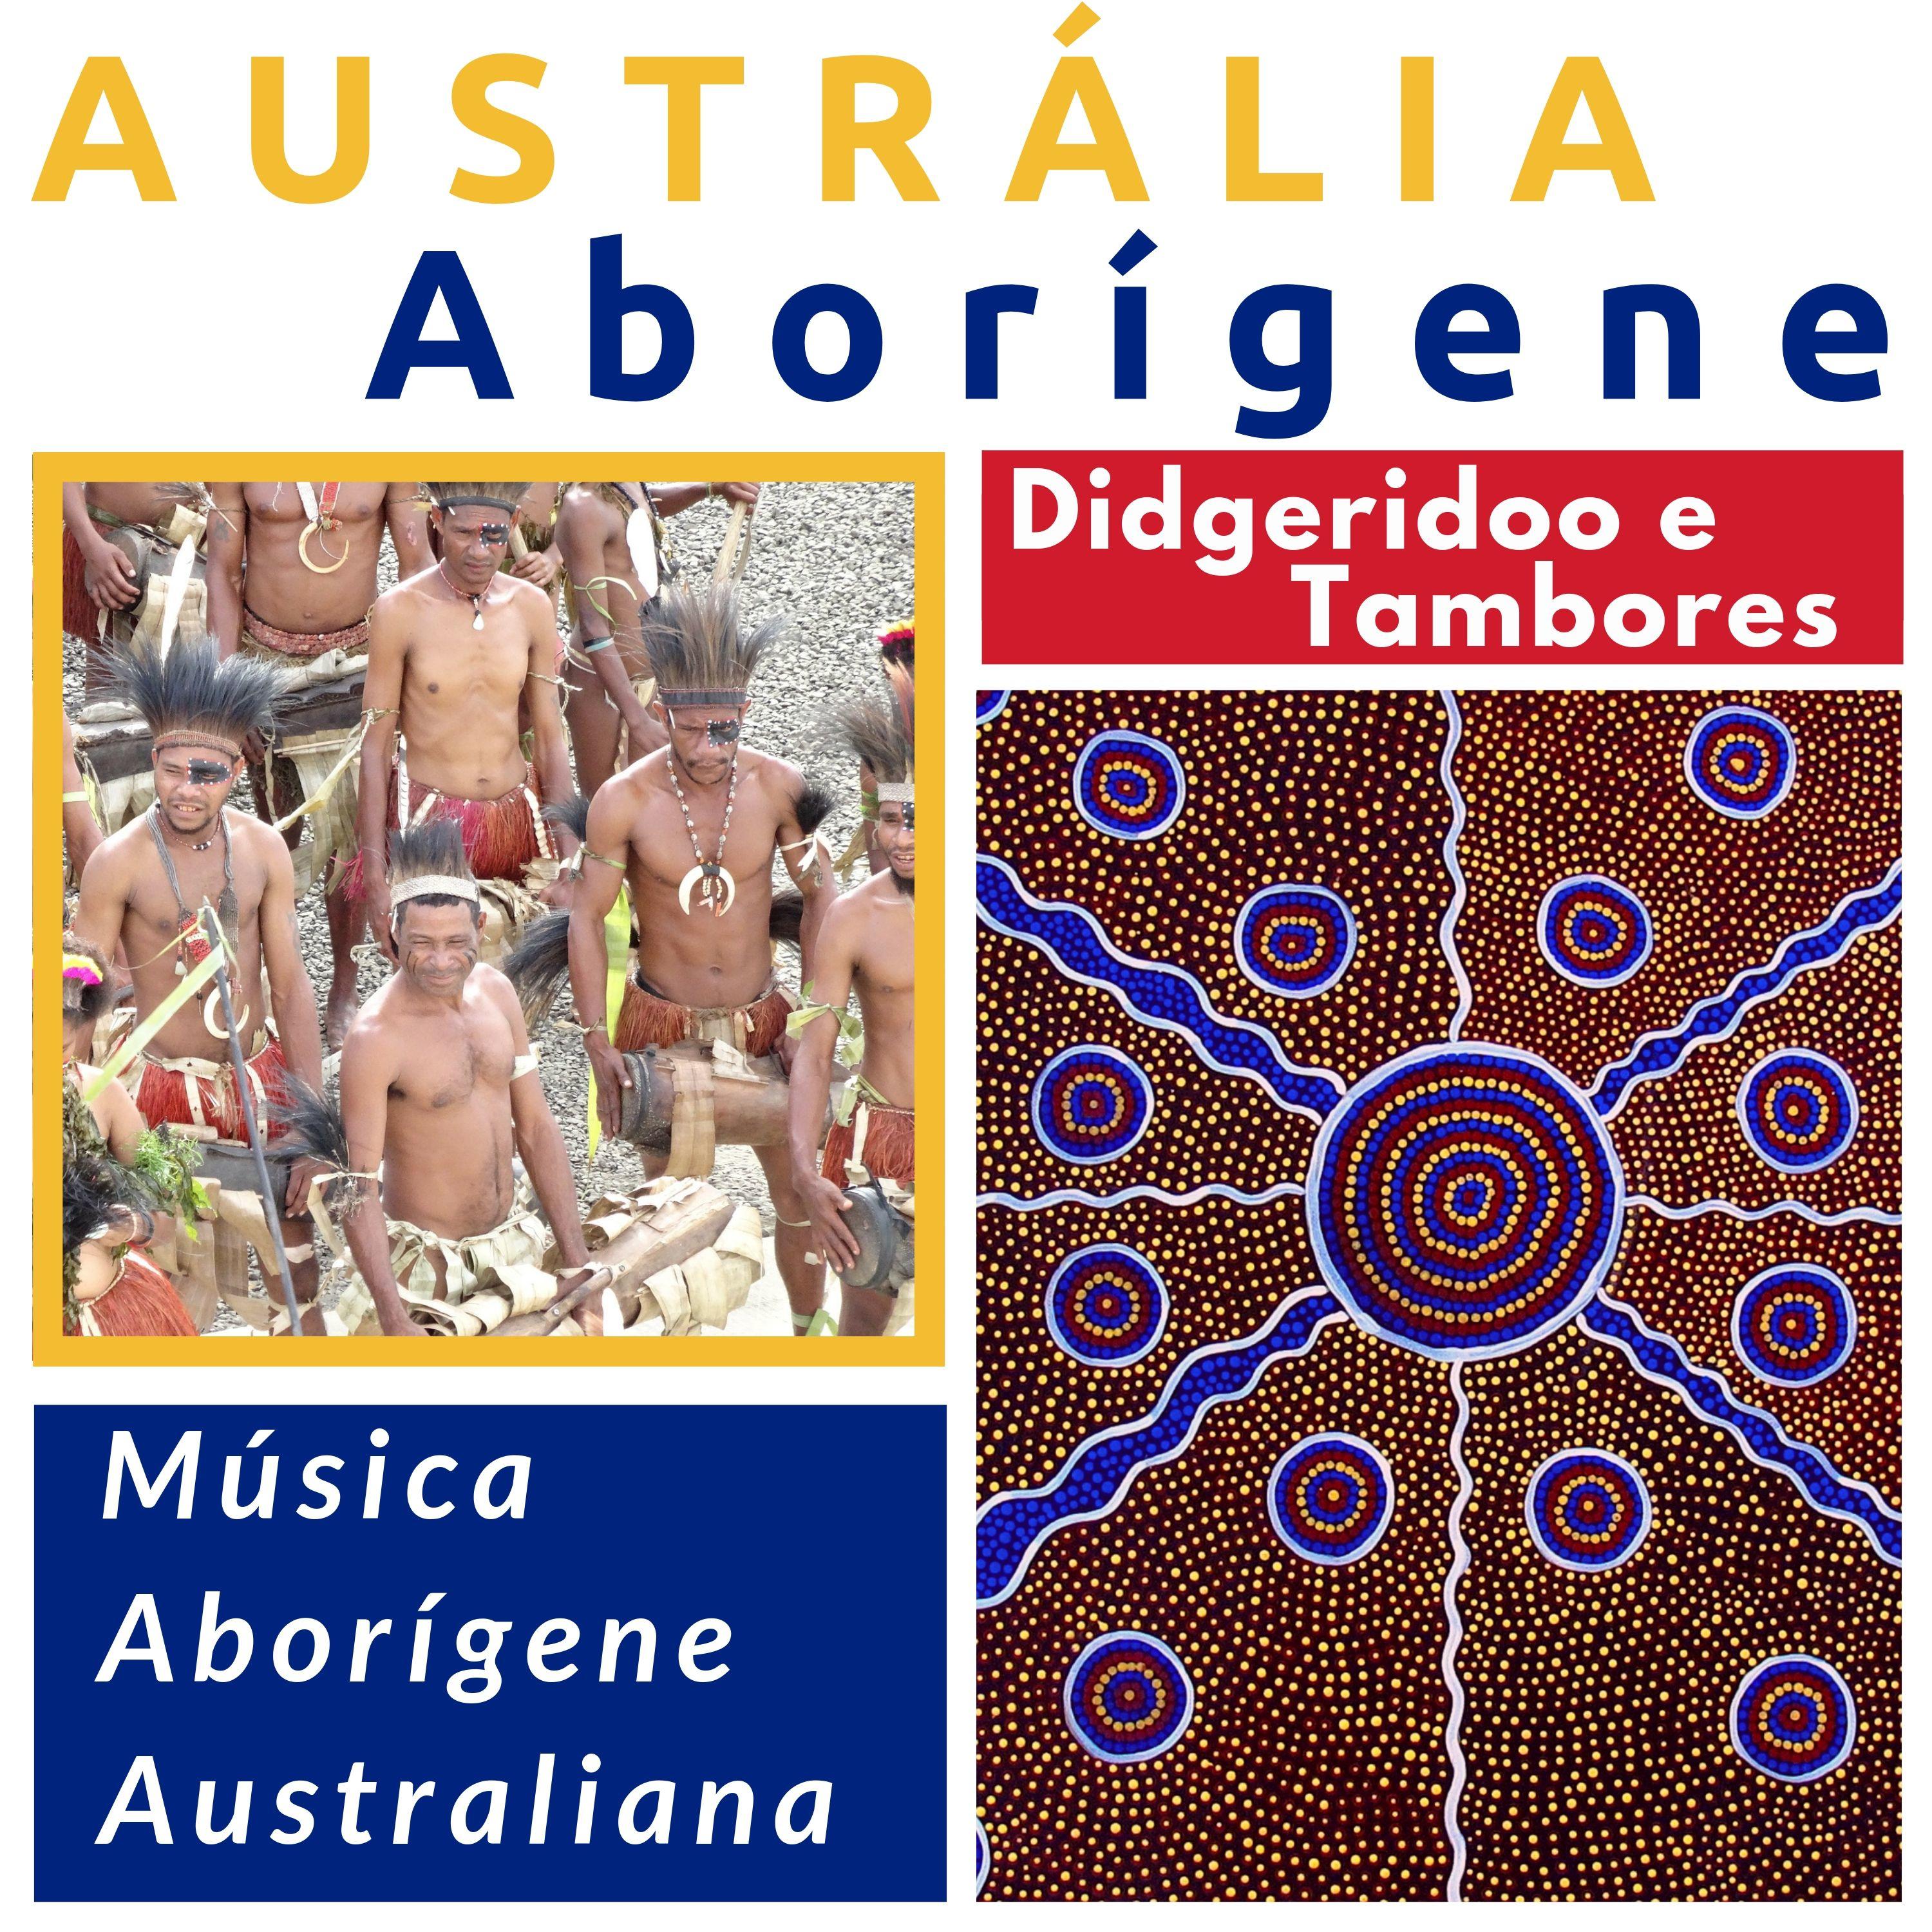 Austra lia Abori gene  Mu sica Abori gene Australiana com Didgeridoo e Tambores